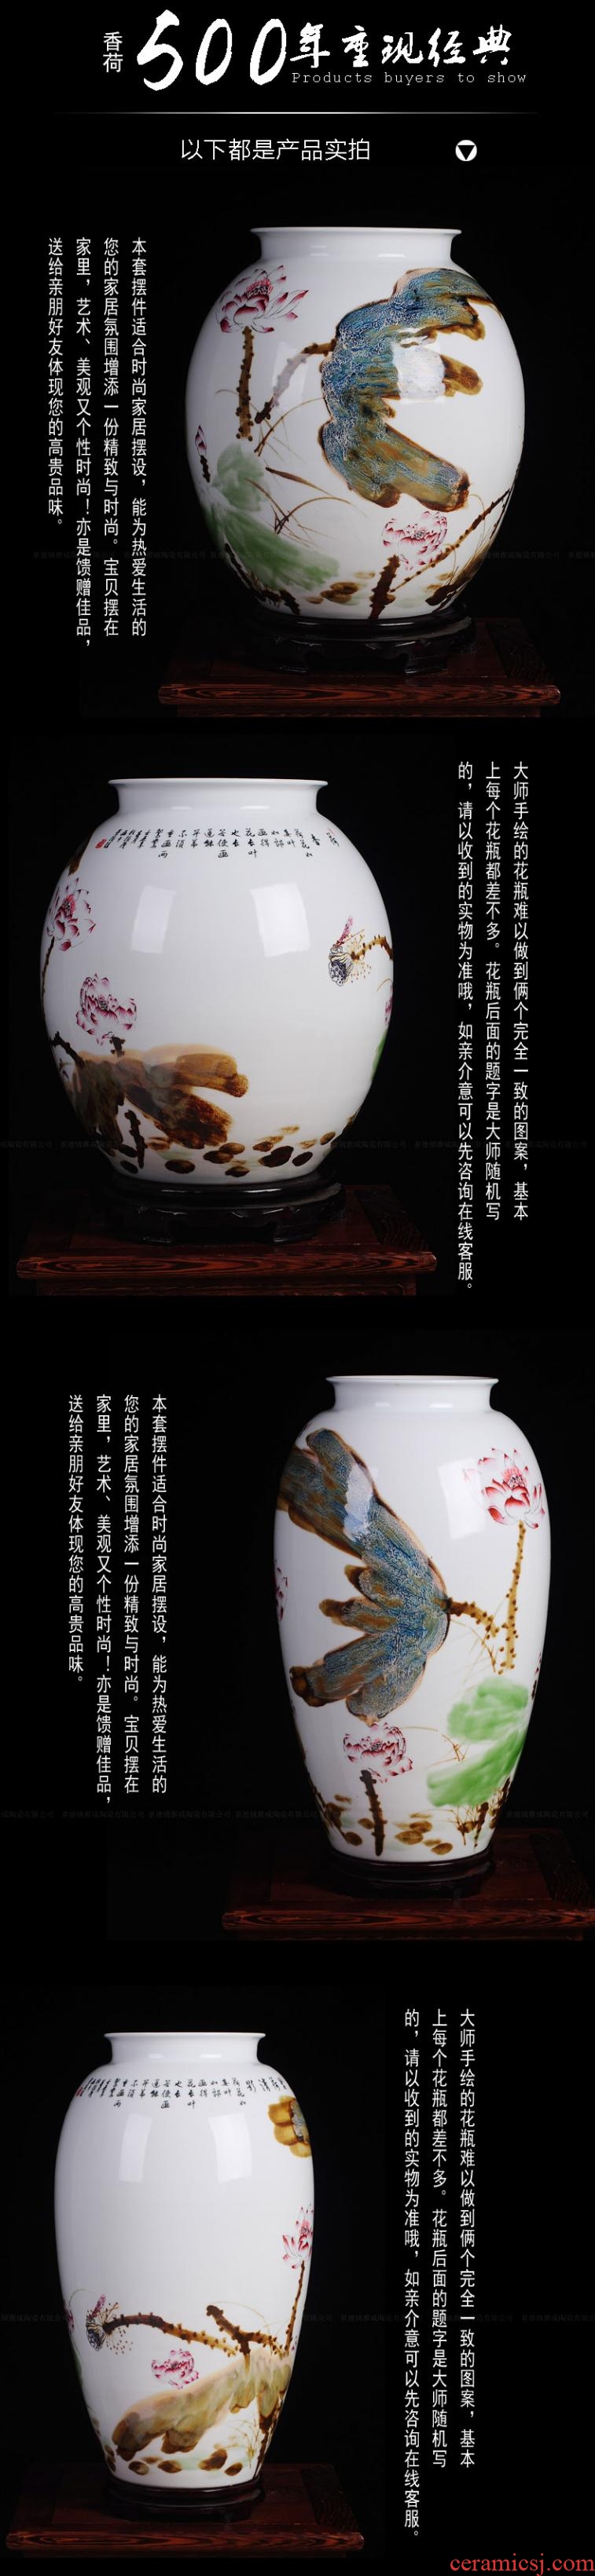 Jingdezhen ceramics of large vase furnishing articles furnishing articles flower arranging device youligong red wine sitting room adornment household - 520234448611